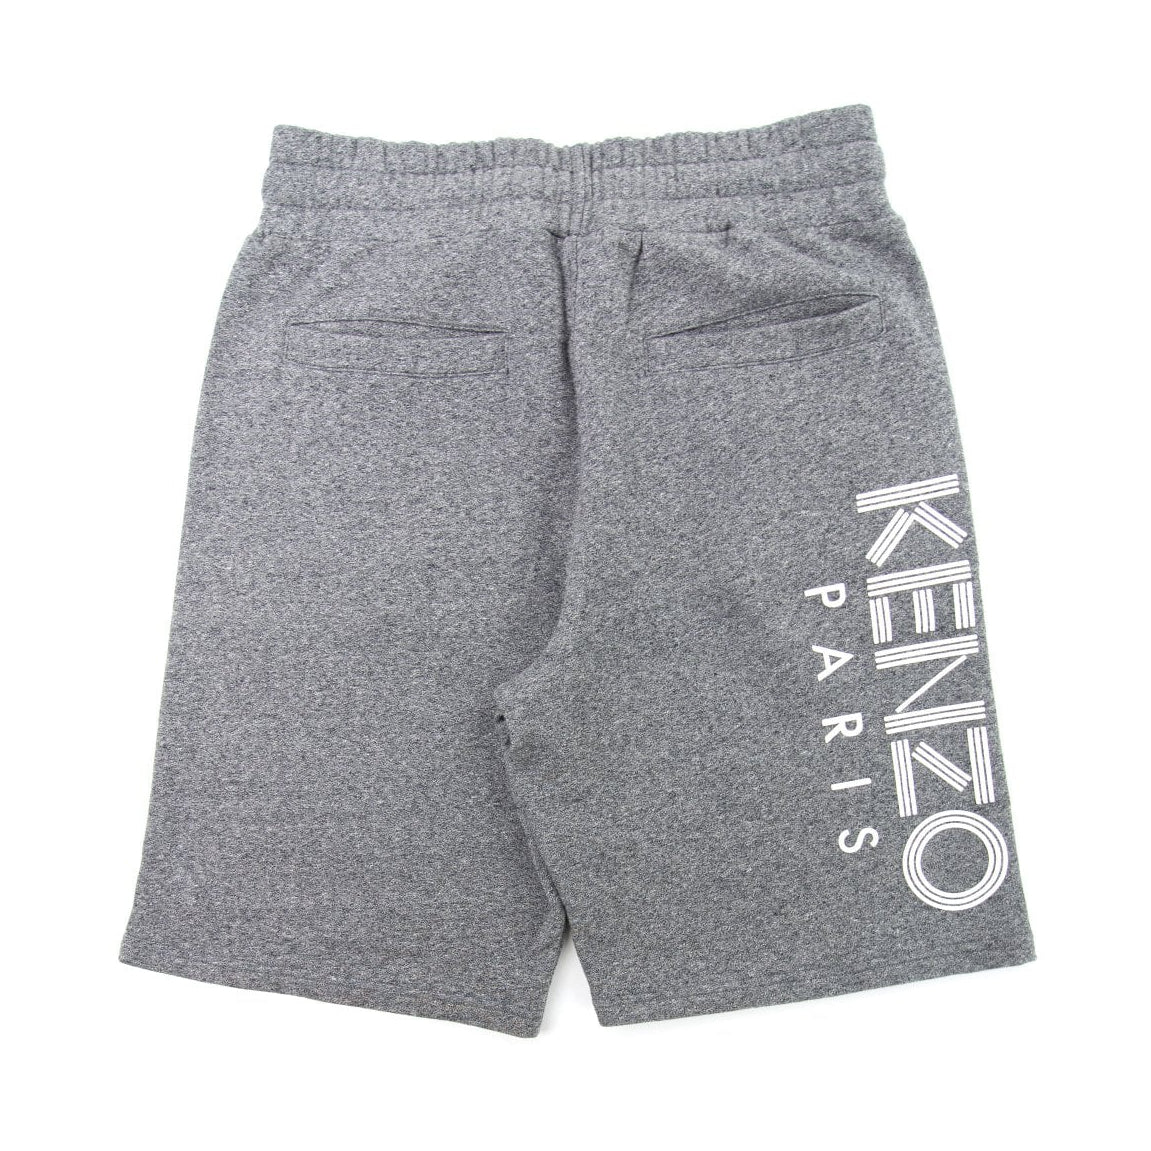 Kenzo Kenzo Sport Shorts - 98 Grey - Escape Menswear